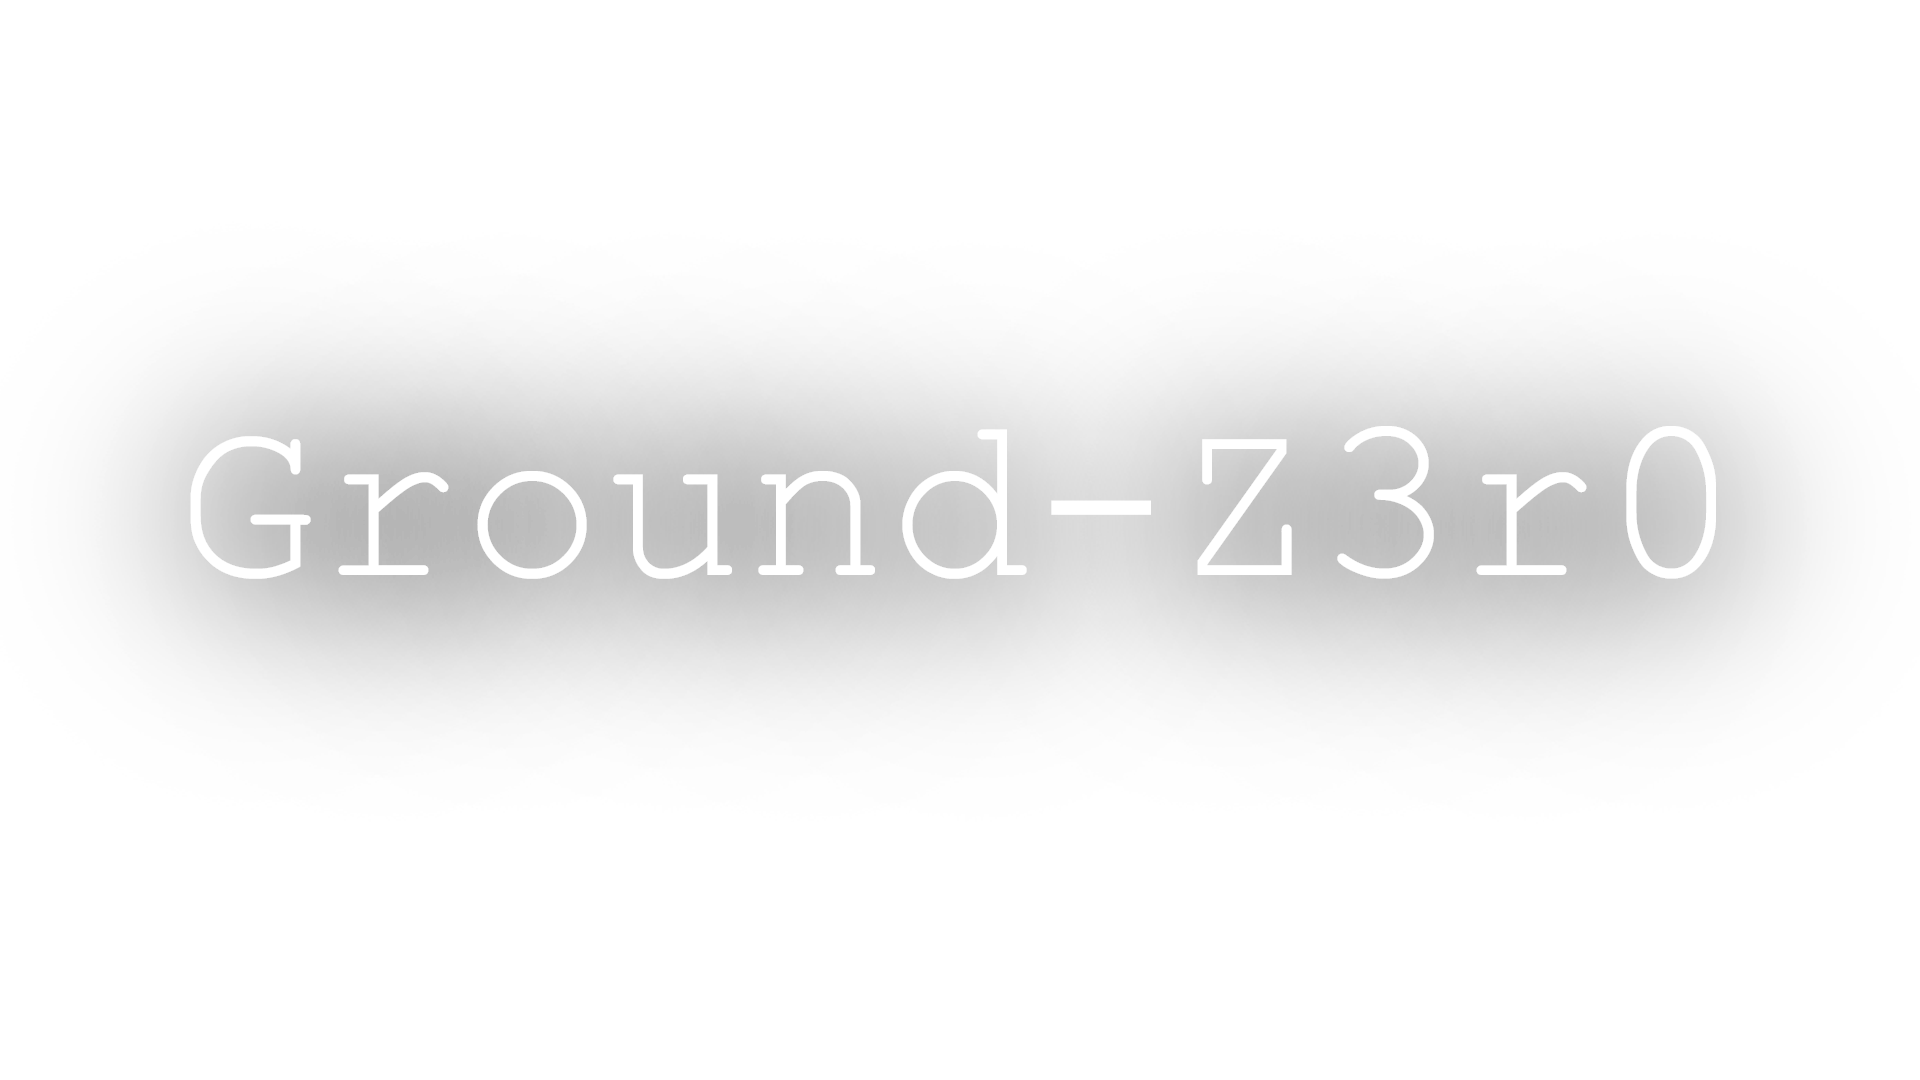 Ground-Z3r0